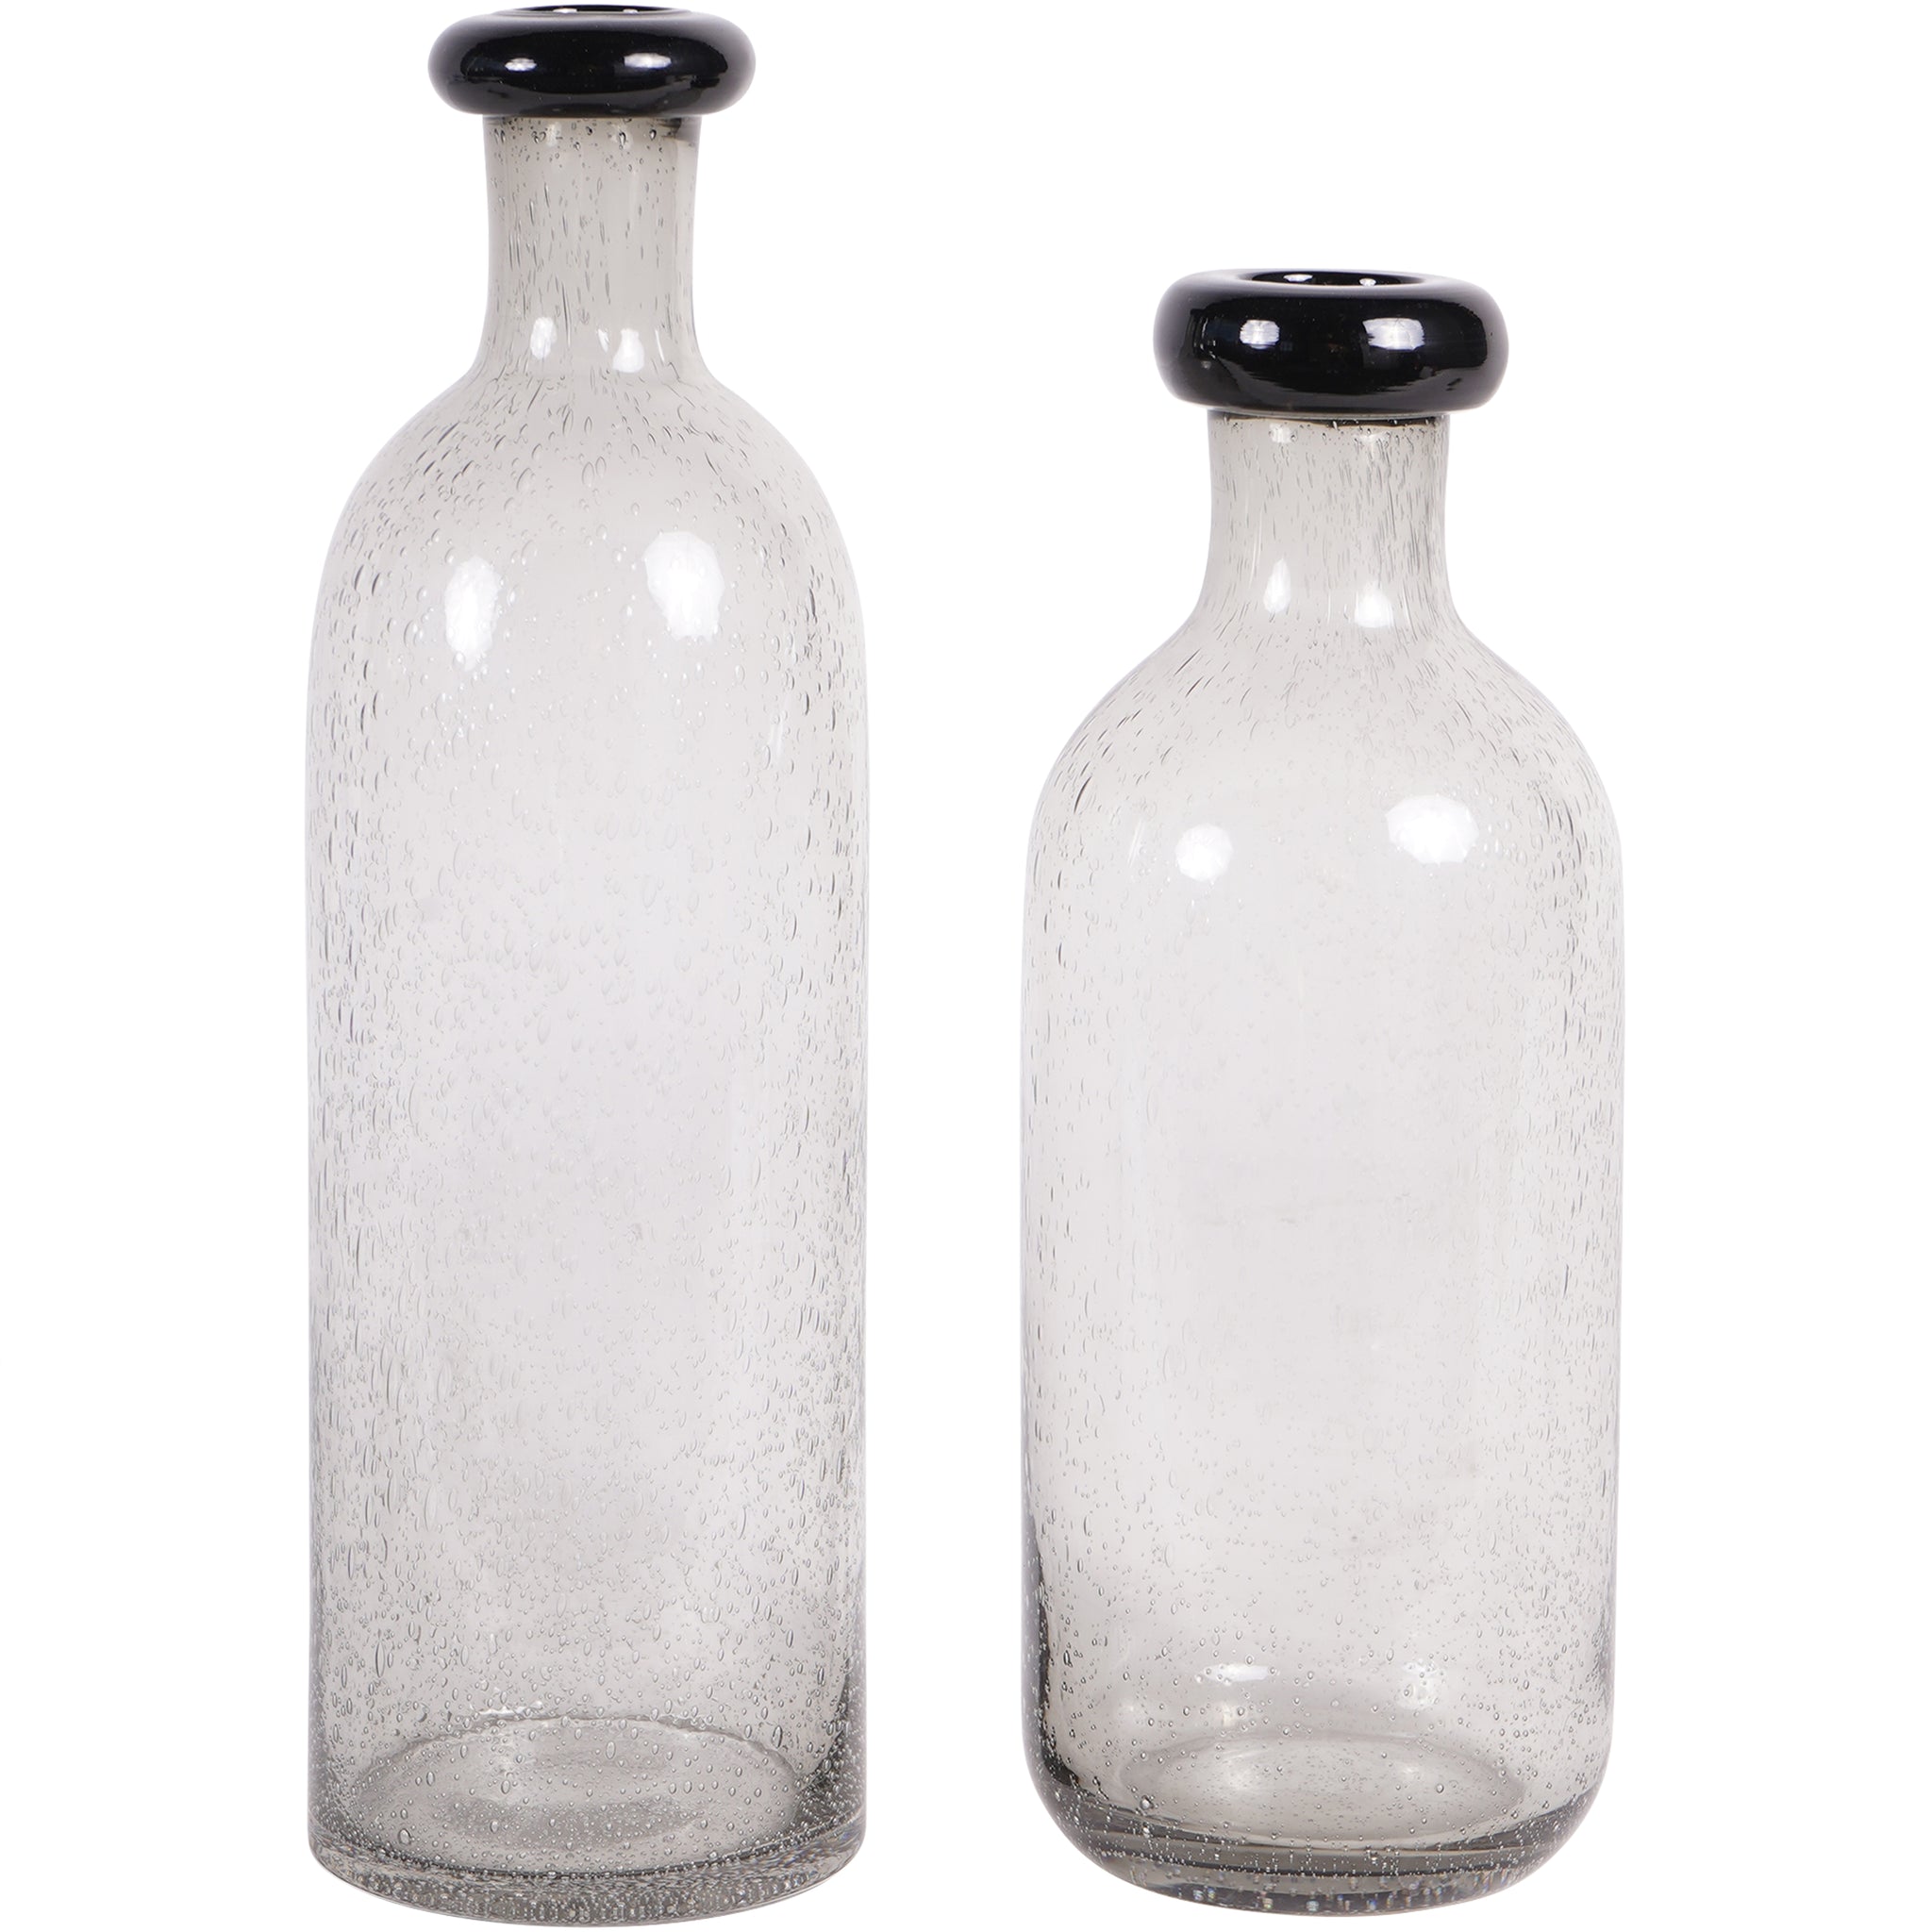 Smokey Glass Bottle Vase Small